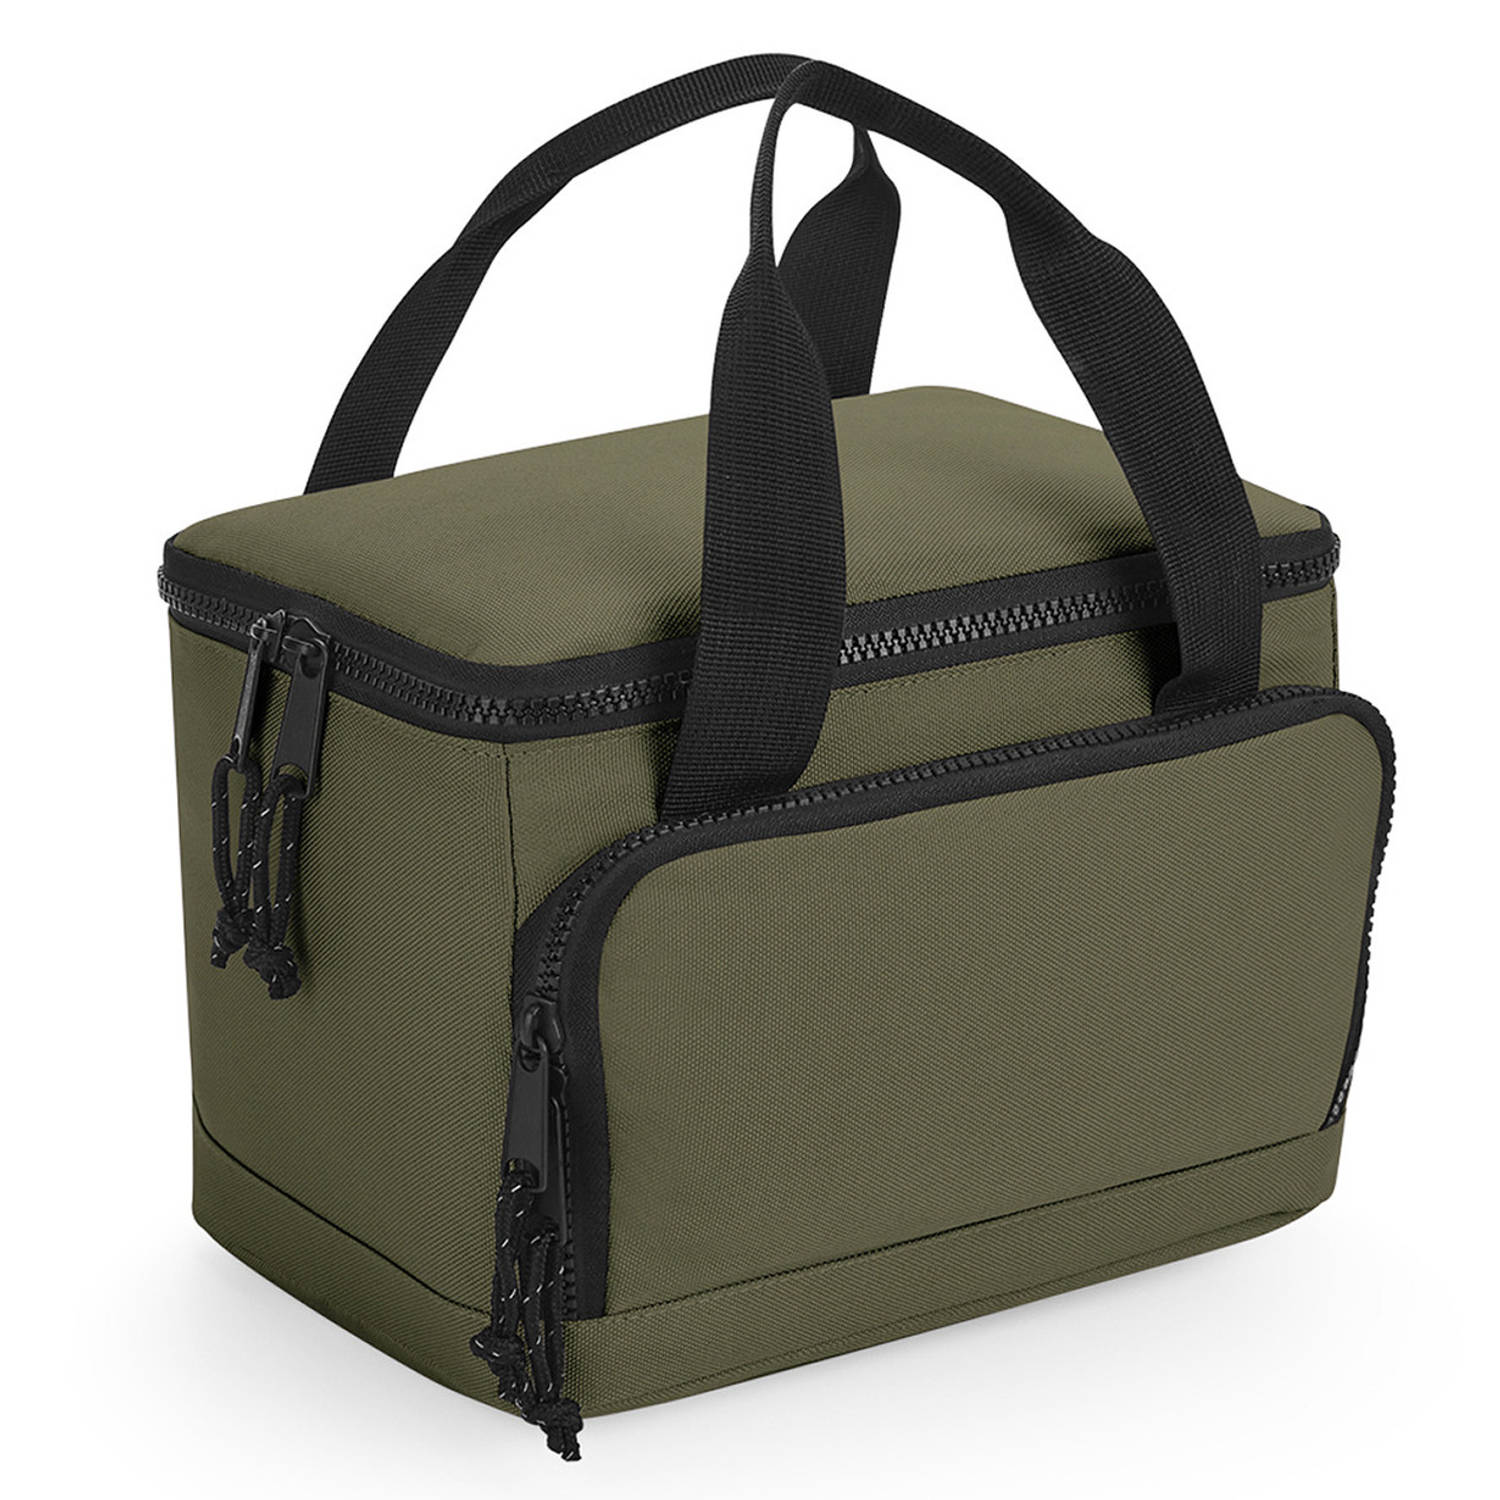 Bagbase koeltasje-lunch tas model Compact 24 x 17 x 17 cm 2 vakken military groen klein model Koelta